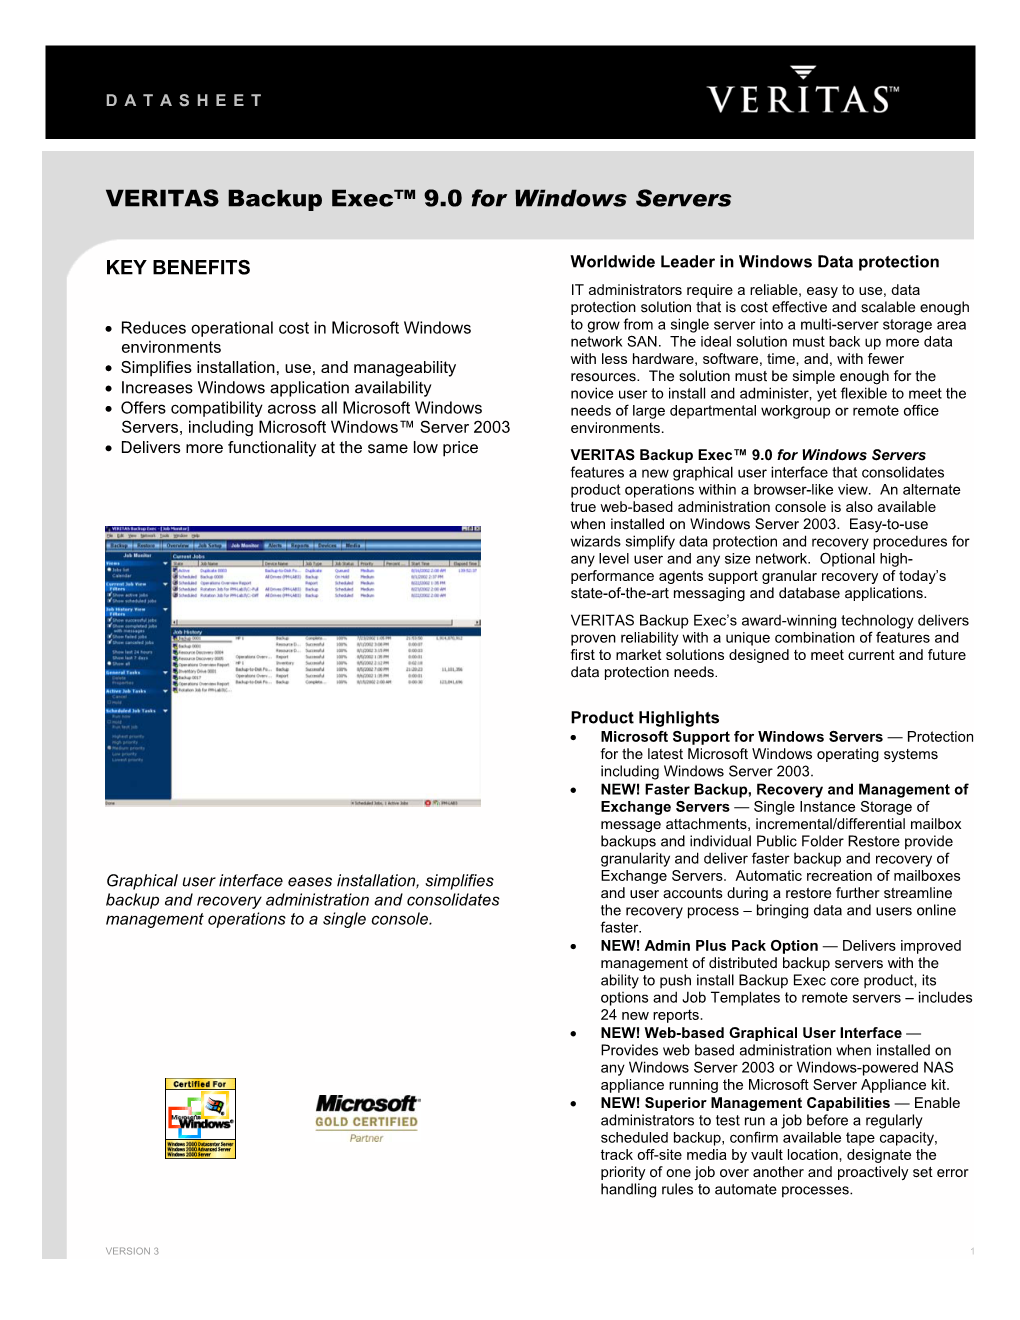 VERITAS Backup Exec™ 9.0 for Windows Servers